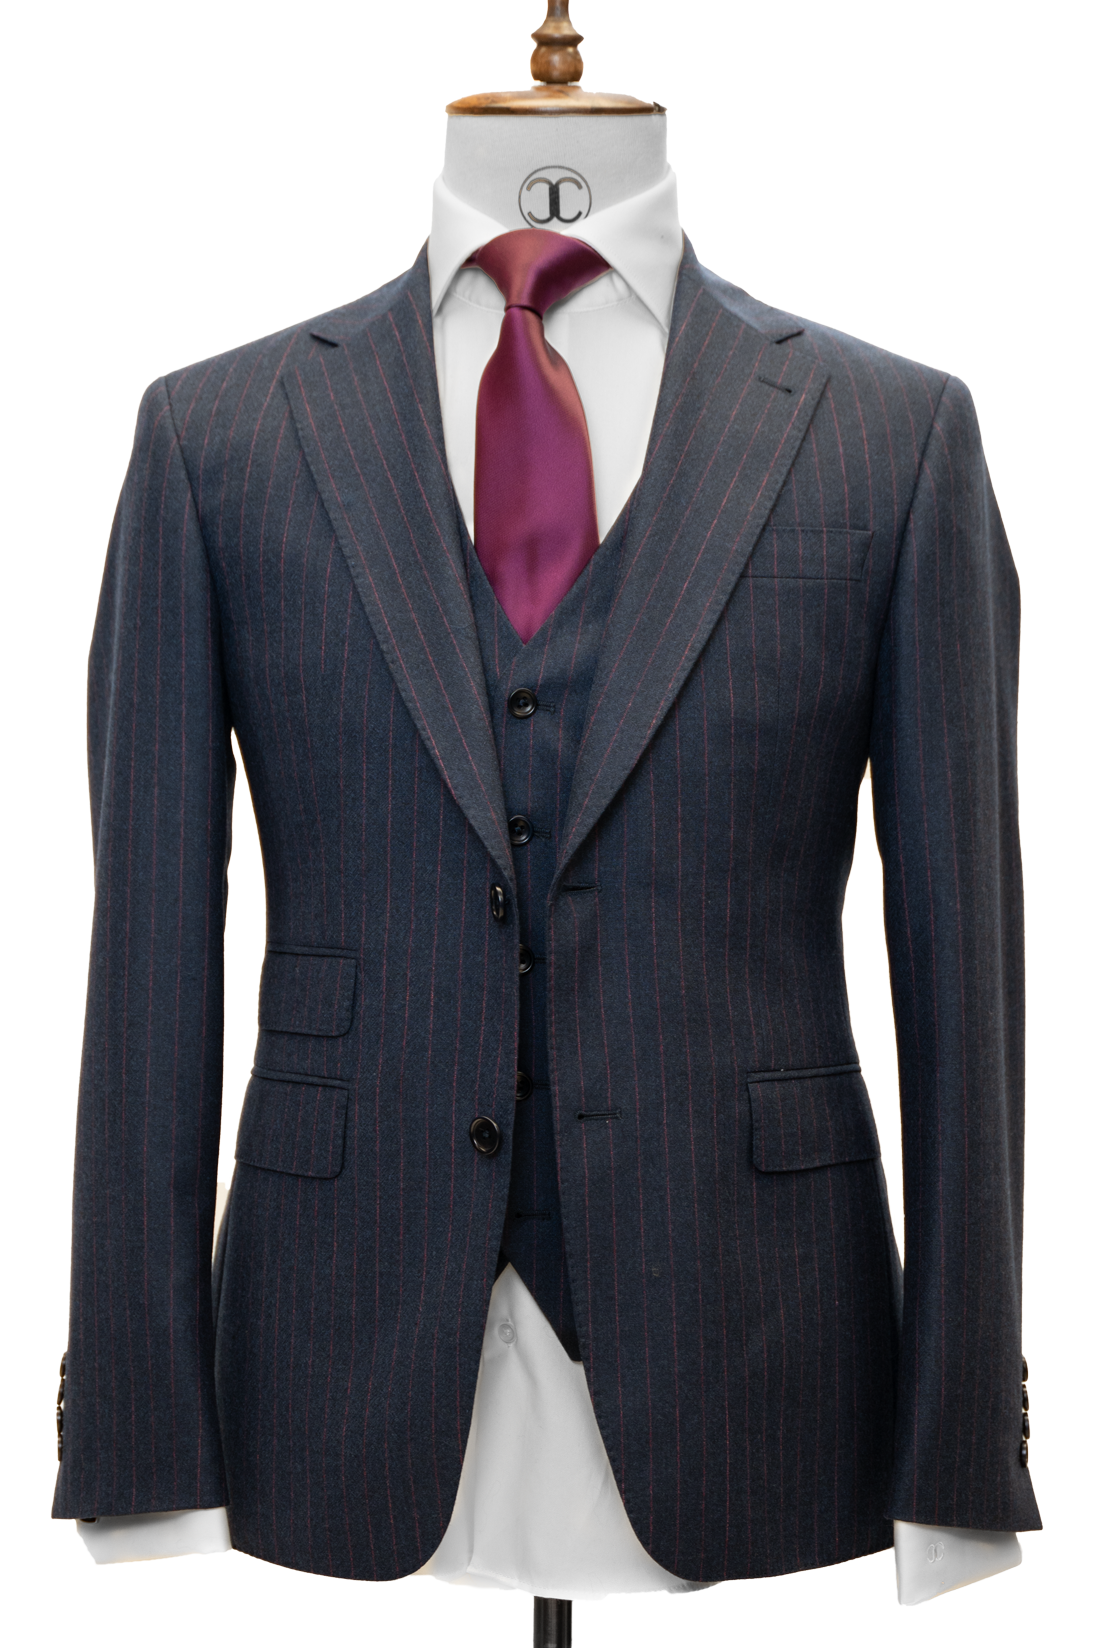 Zignone - Navy Blue with Fuchsia Pinstripes Cashmere 3-Piece Slim Fit Suit